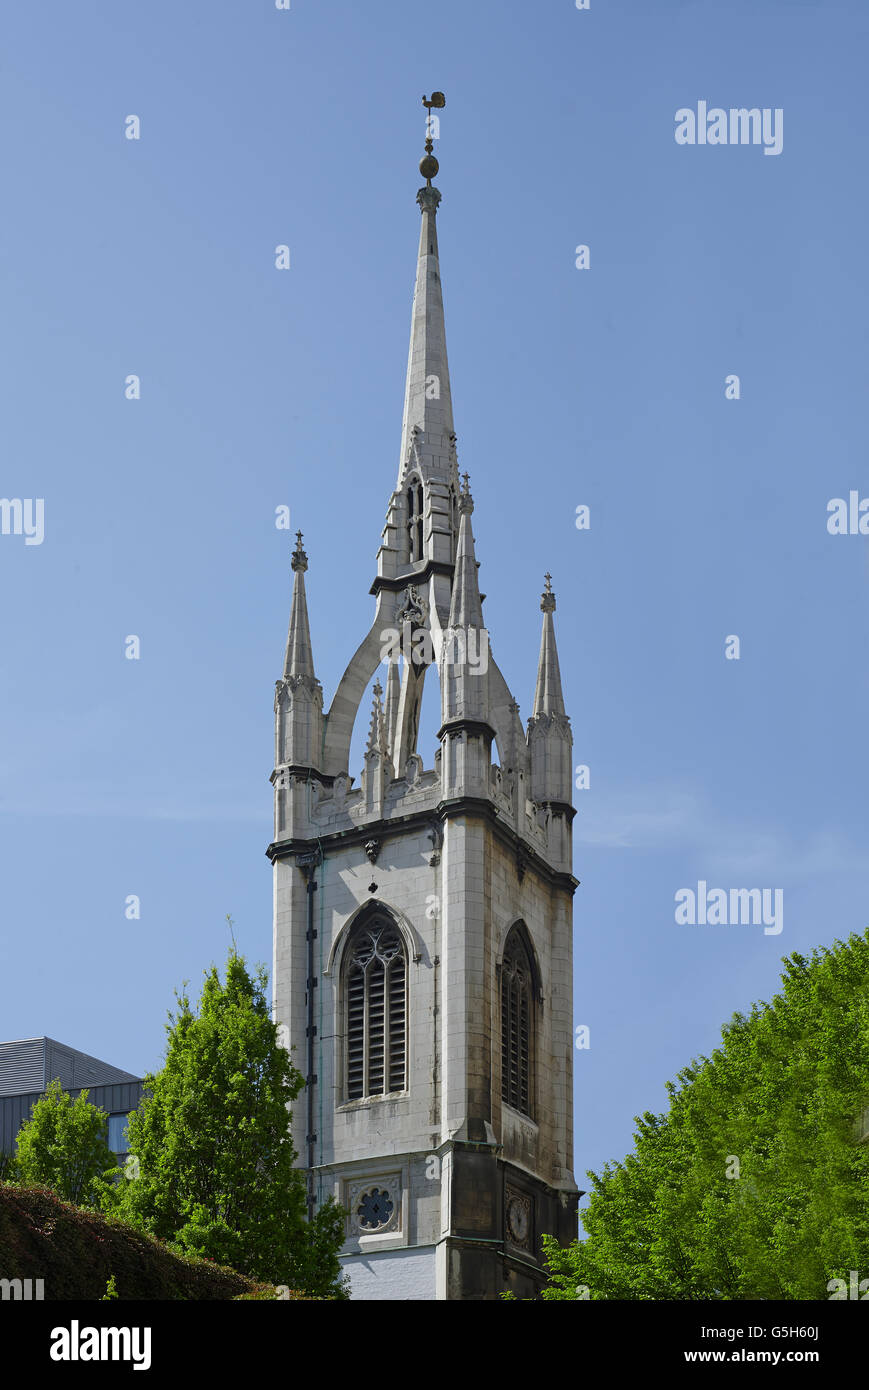 St. Dunstan im Osten, Kirche in der City of London. Die Nadel Turmspitze mit Strebebögen. Stockfoto